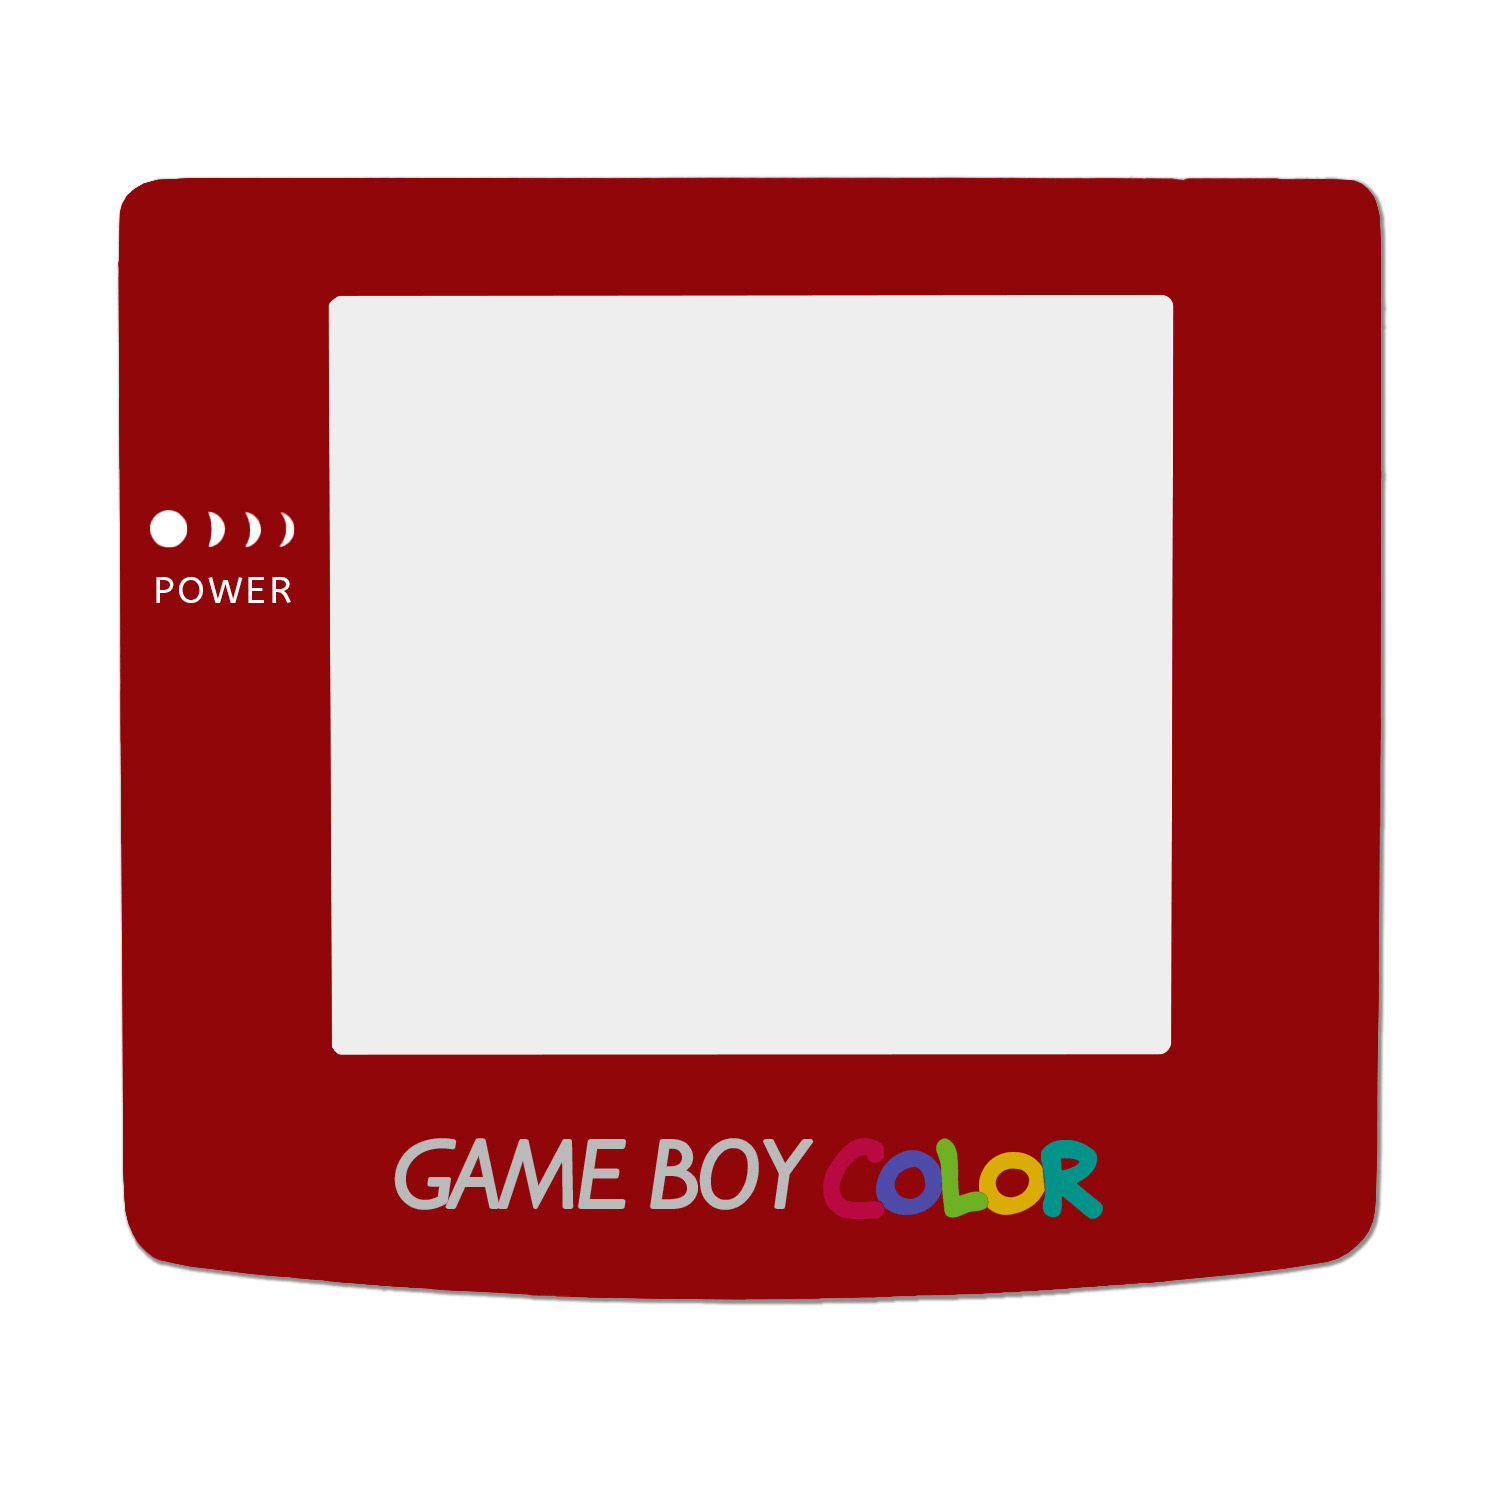 Disco display per Game Boy Color (rosso)